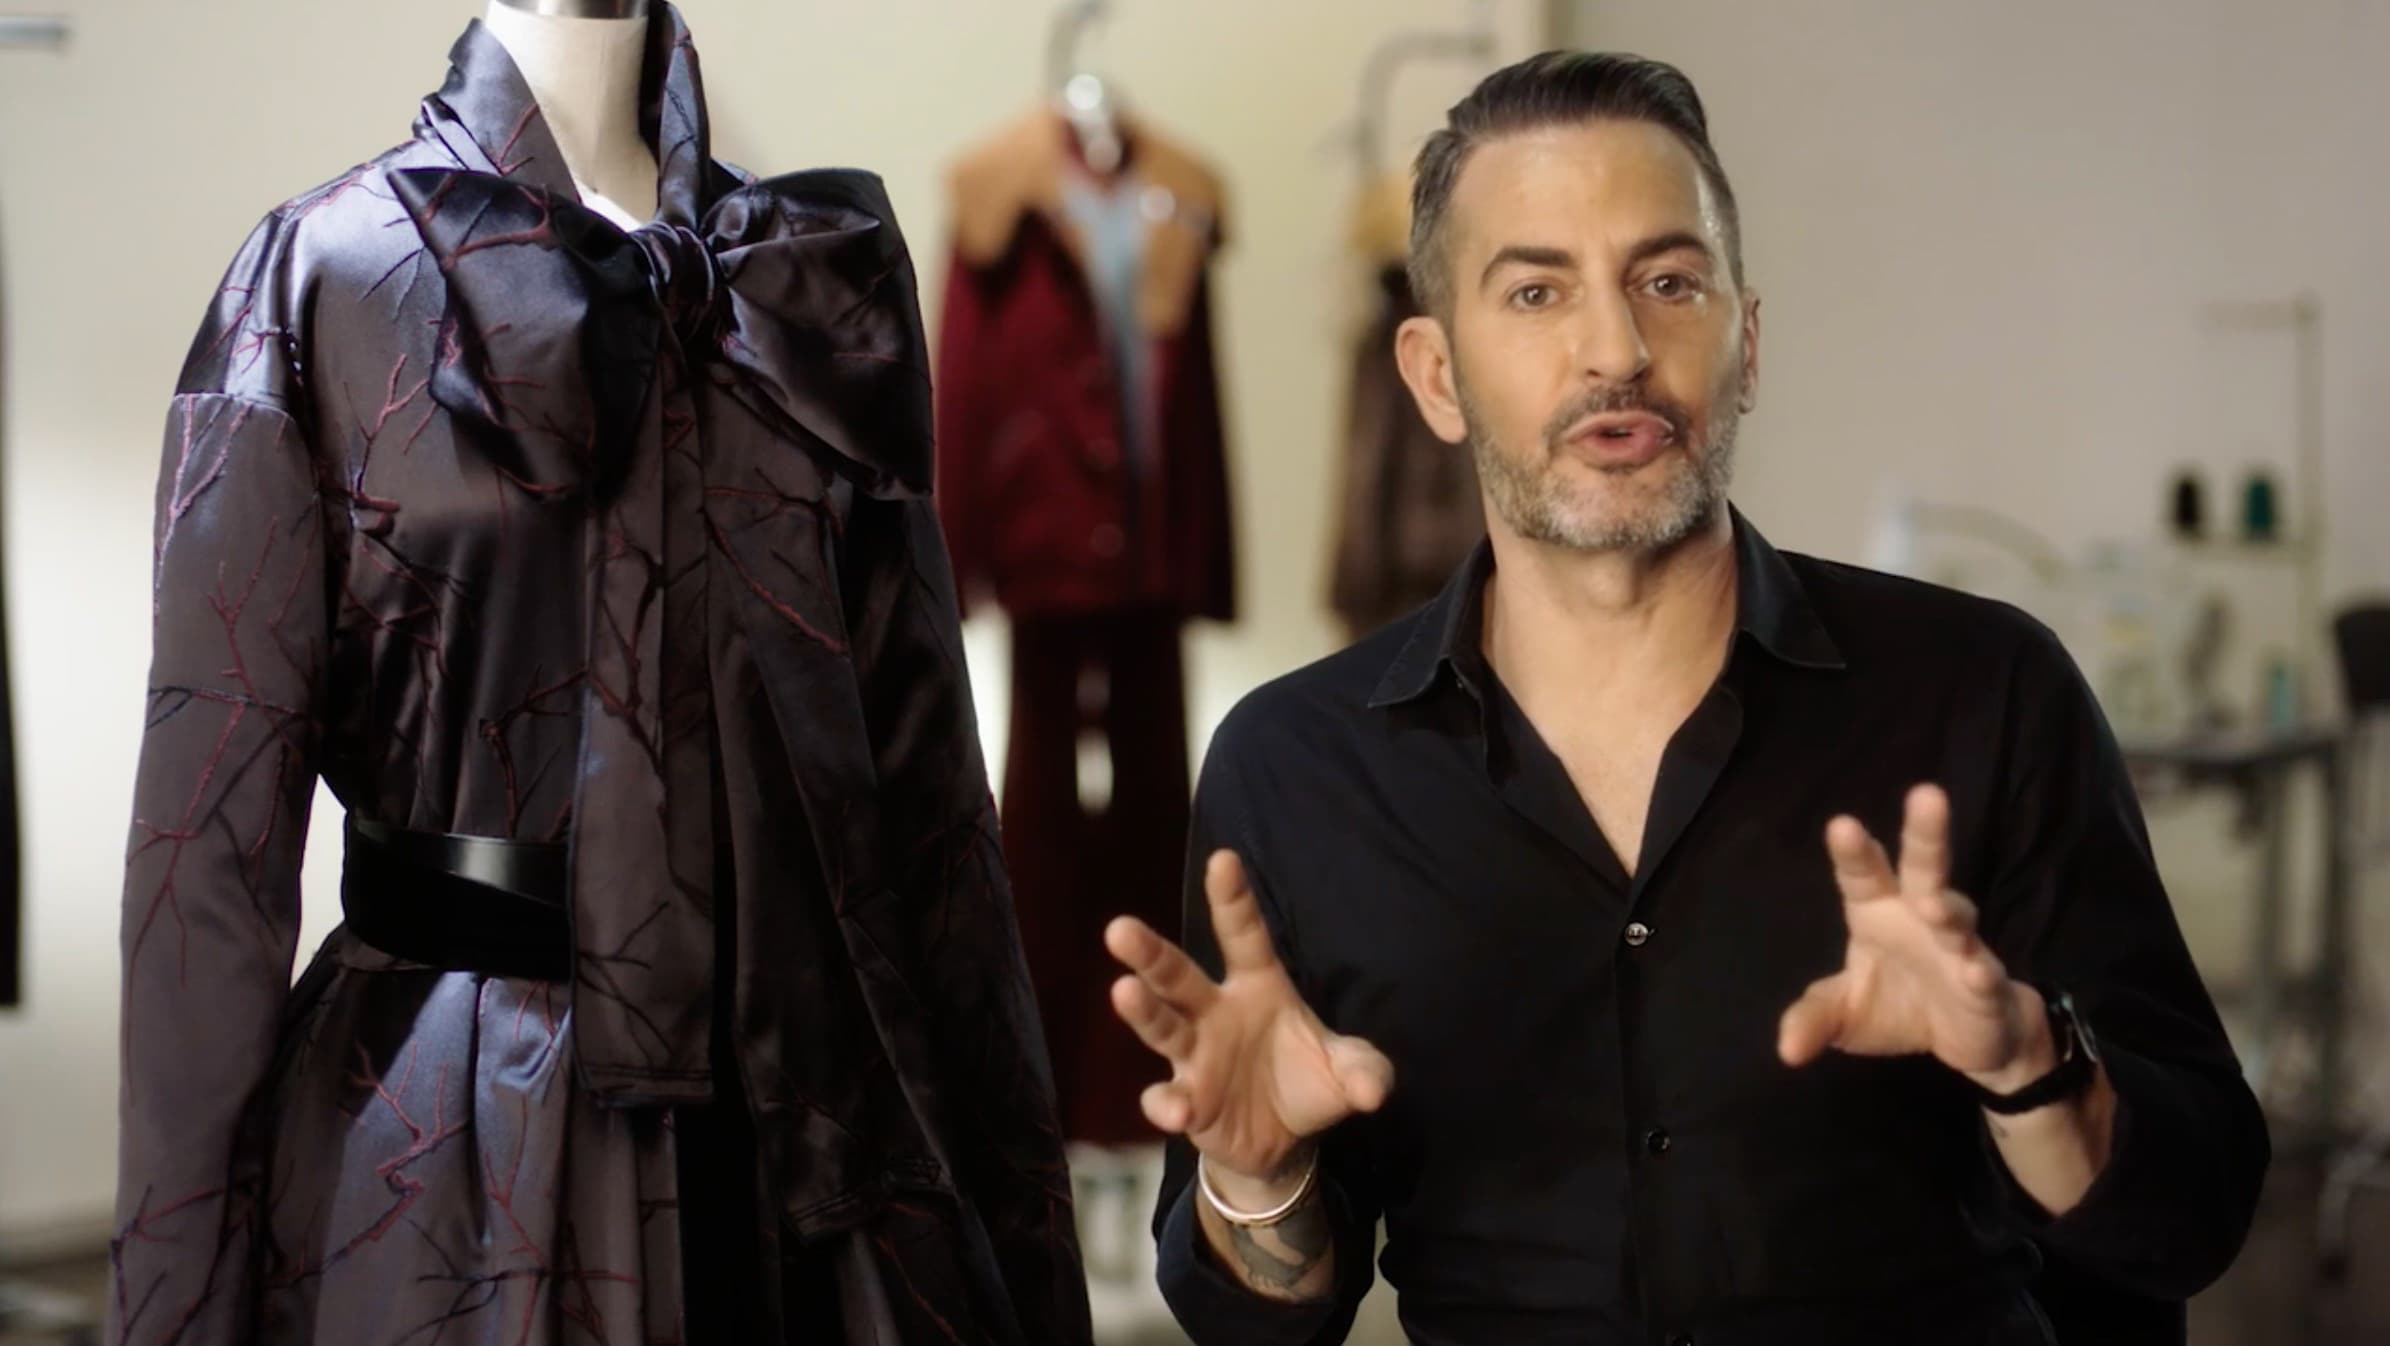 Marc Jacobs Teaches Fashion Design, Official Trailer